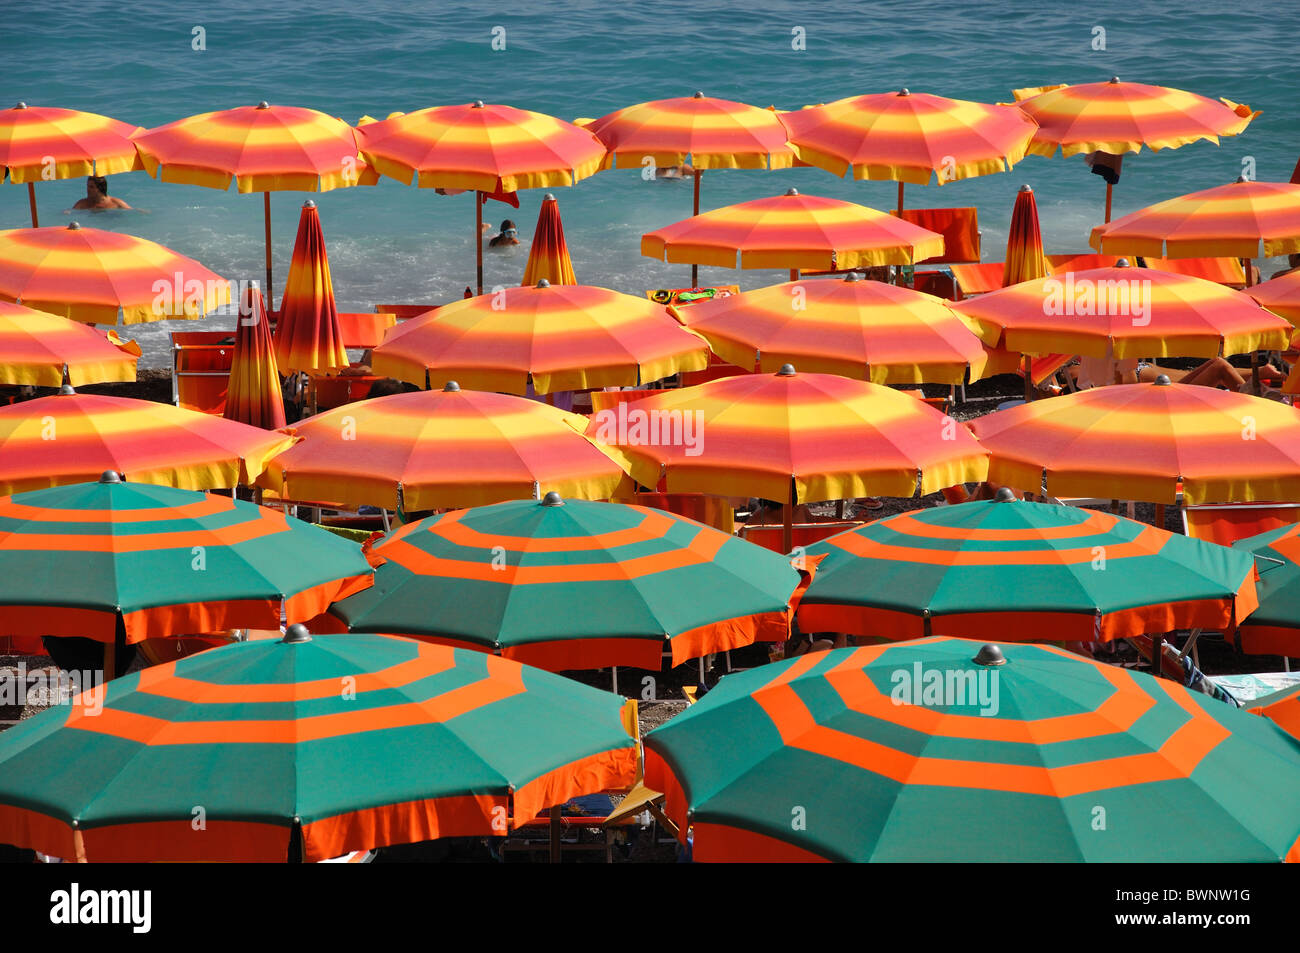 beach umbrellas Positano Italy Stock Photo